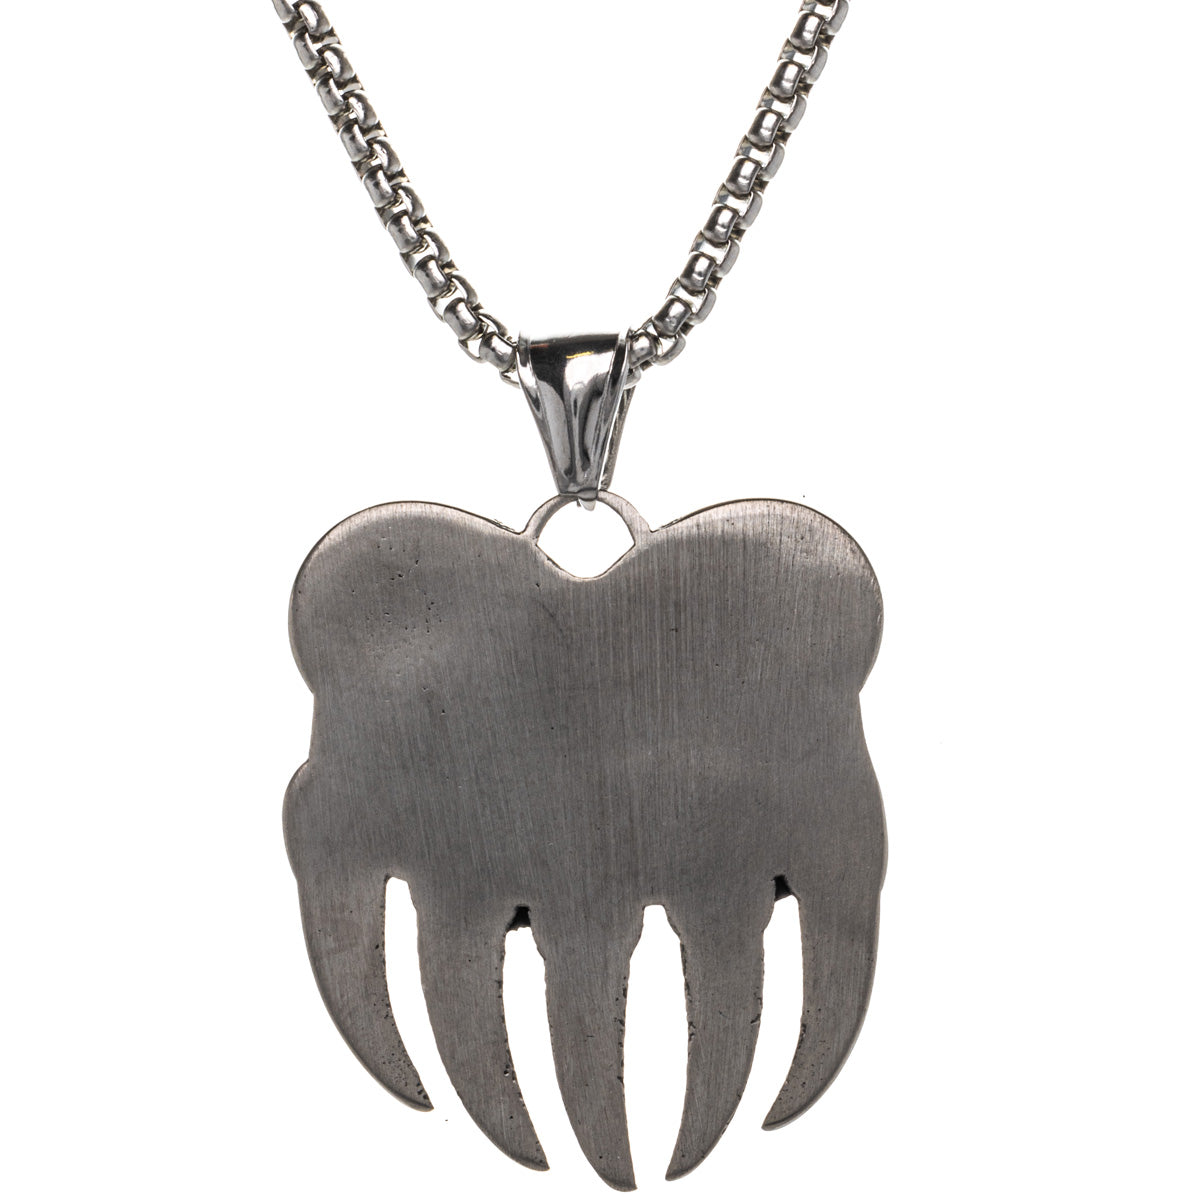 Bear paw pendant necklace (Steel 316L)